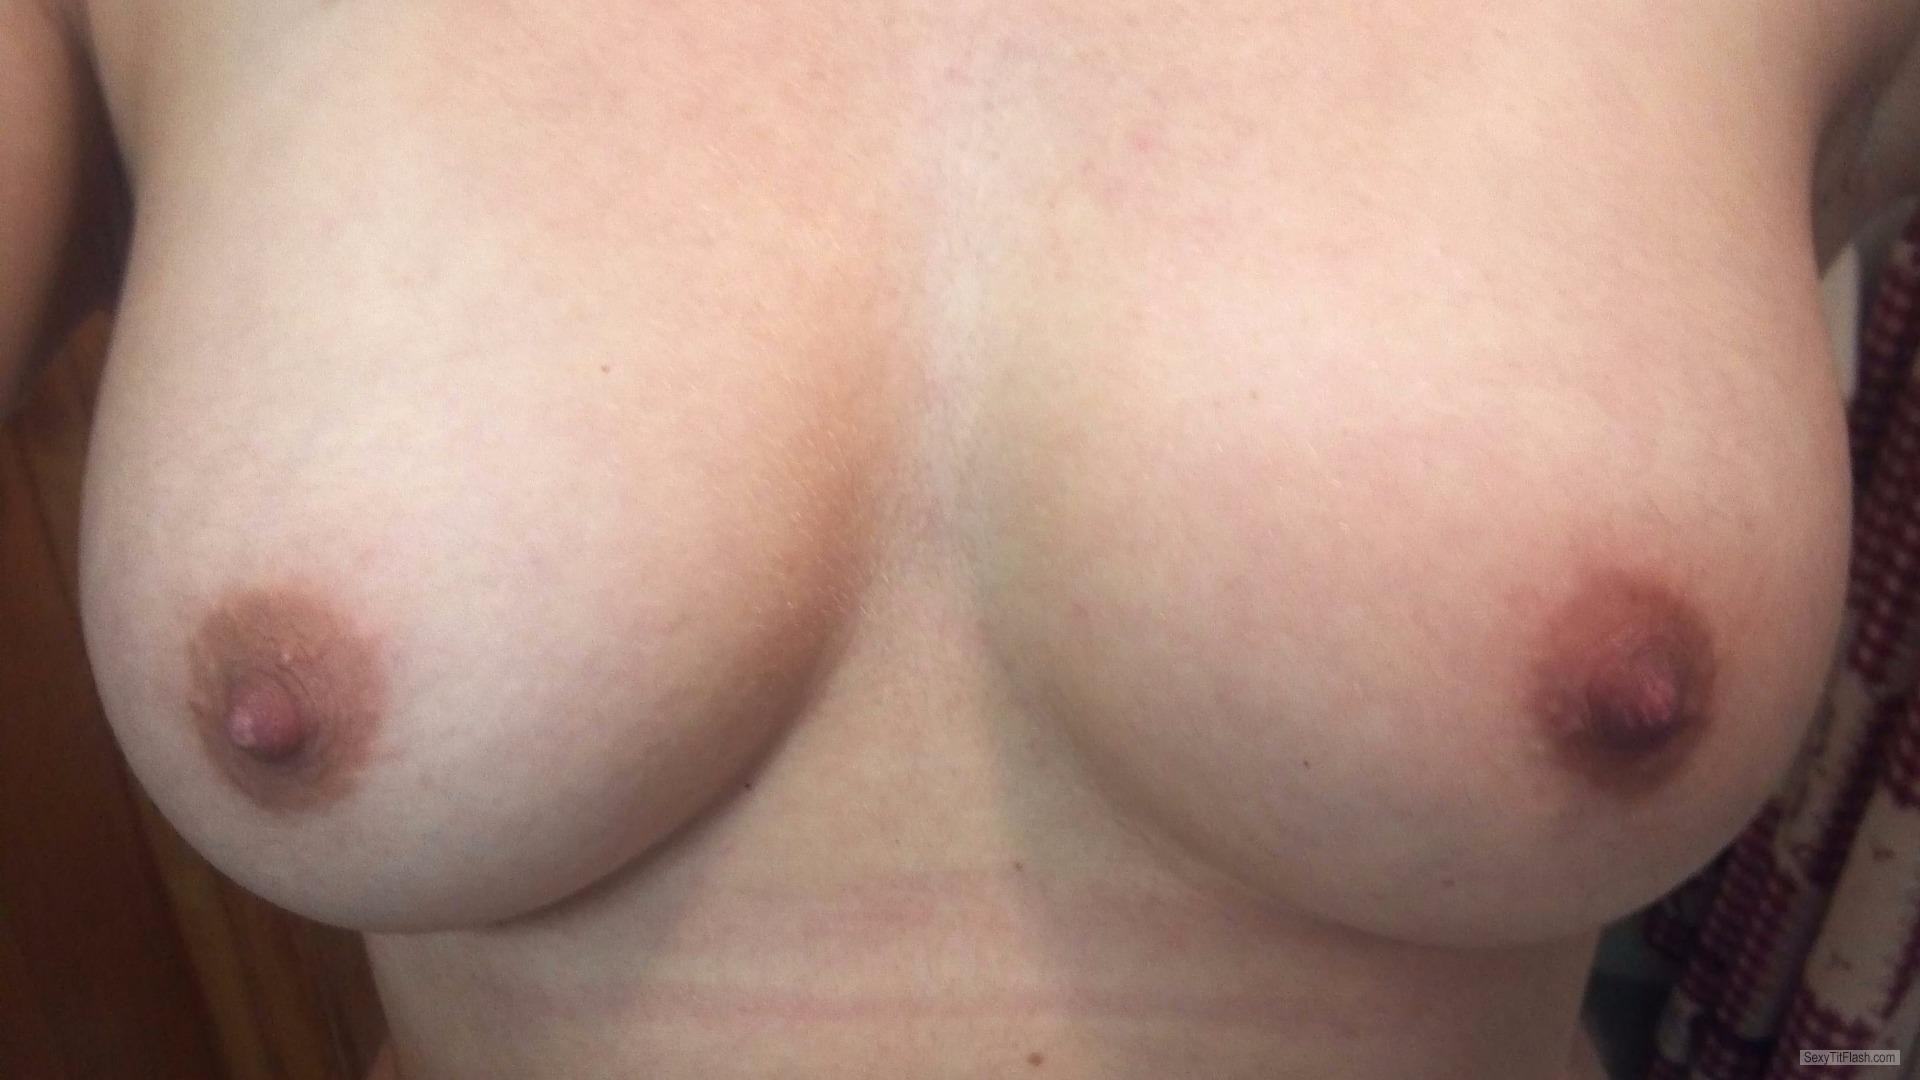 Tit Flash: Ex-Girlfriend's Medium Tits (Selfie) - Shep2015 from United States